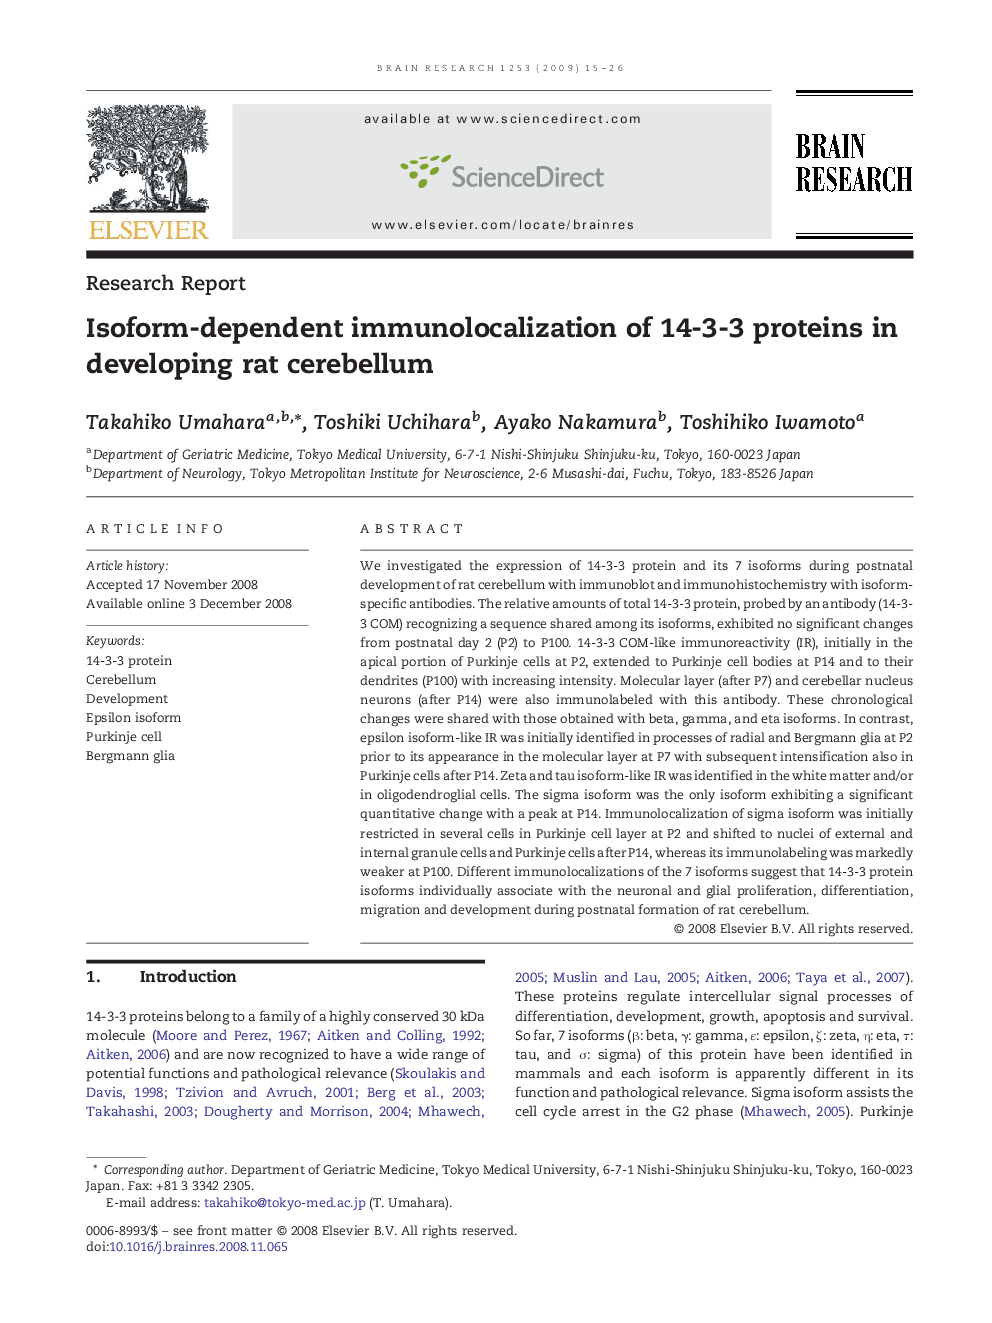 Isoform-dependent immunolocalization of 14-3-3 proteins in developing rat cerebellum